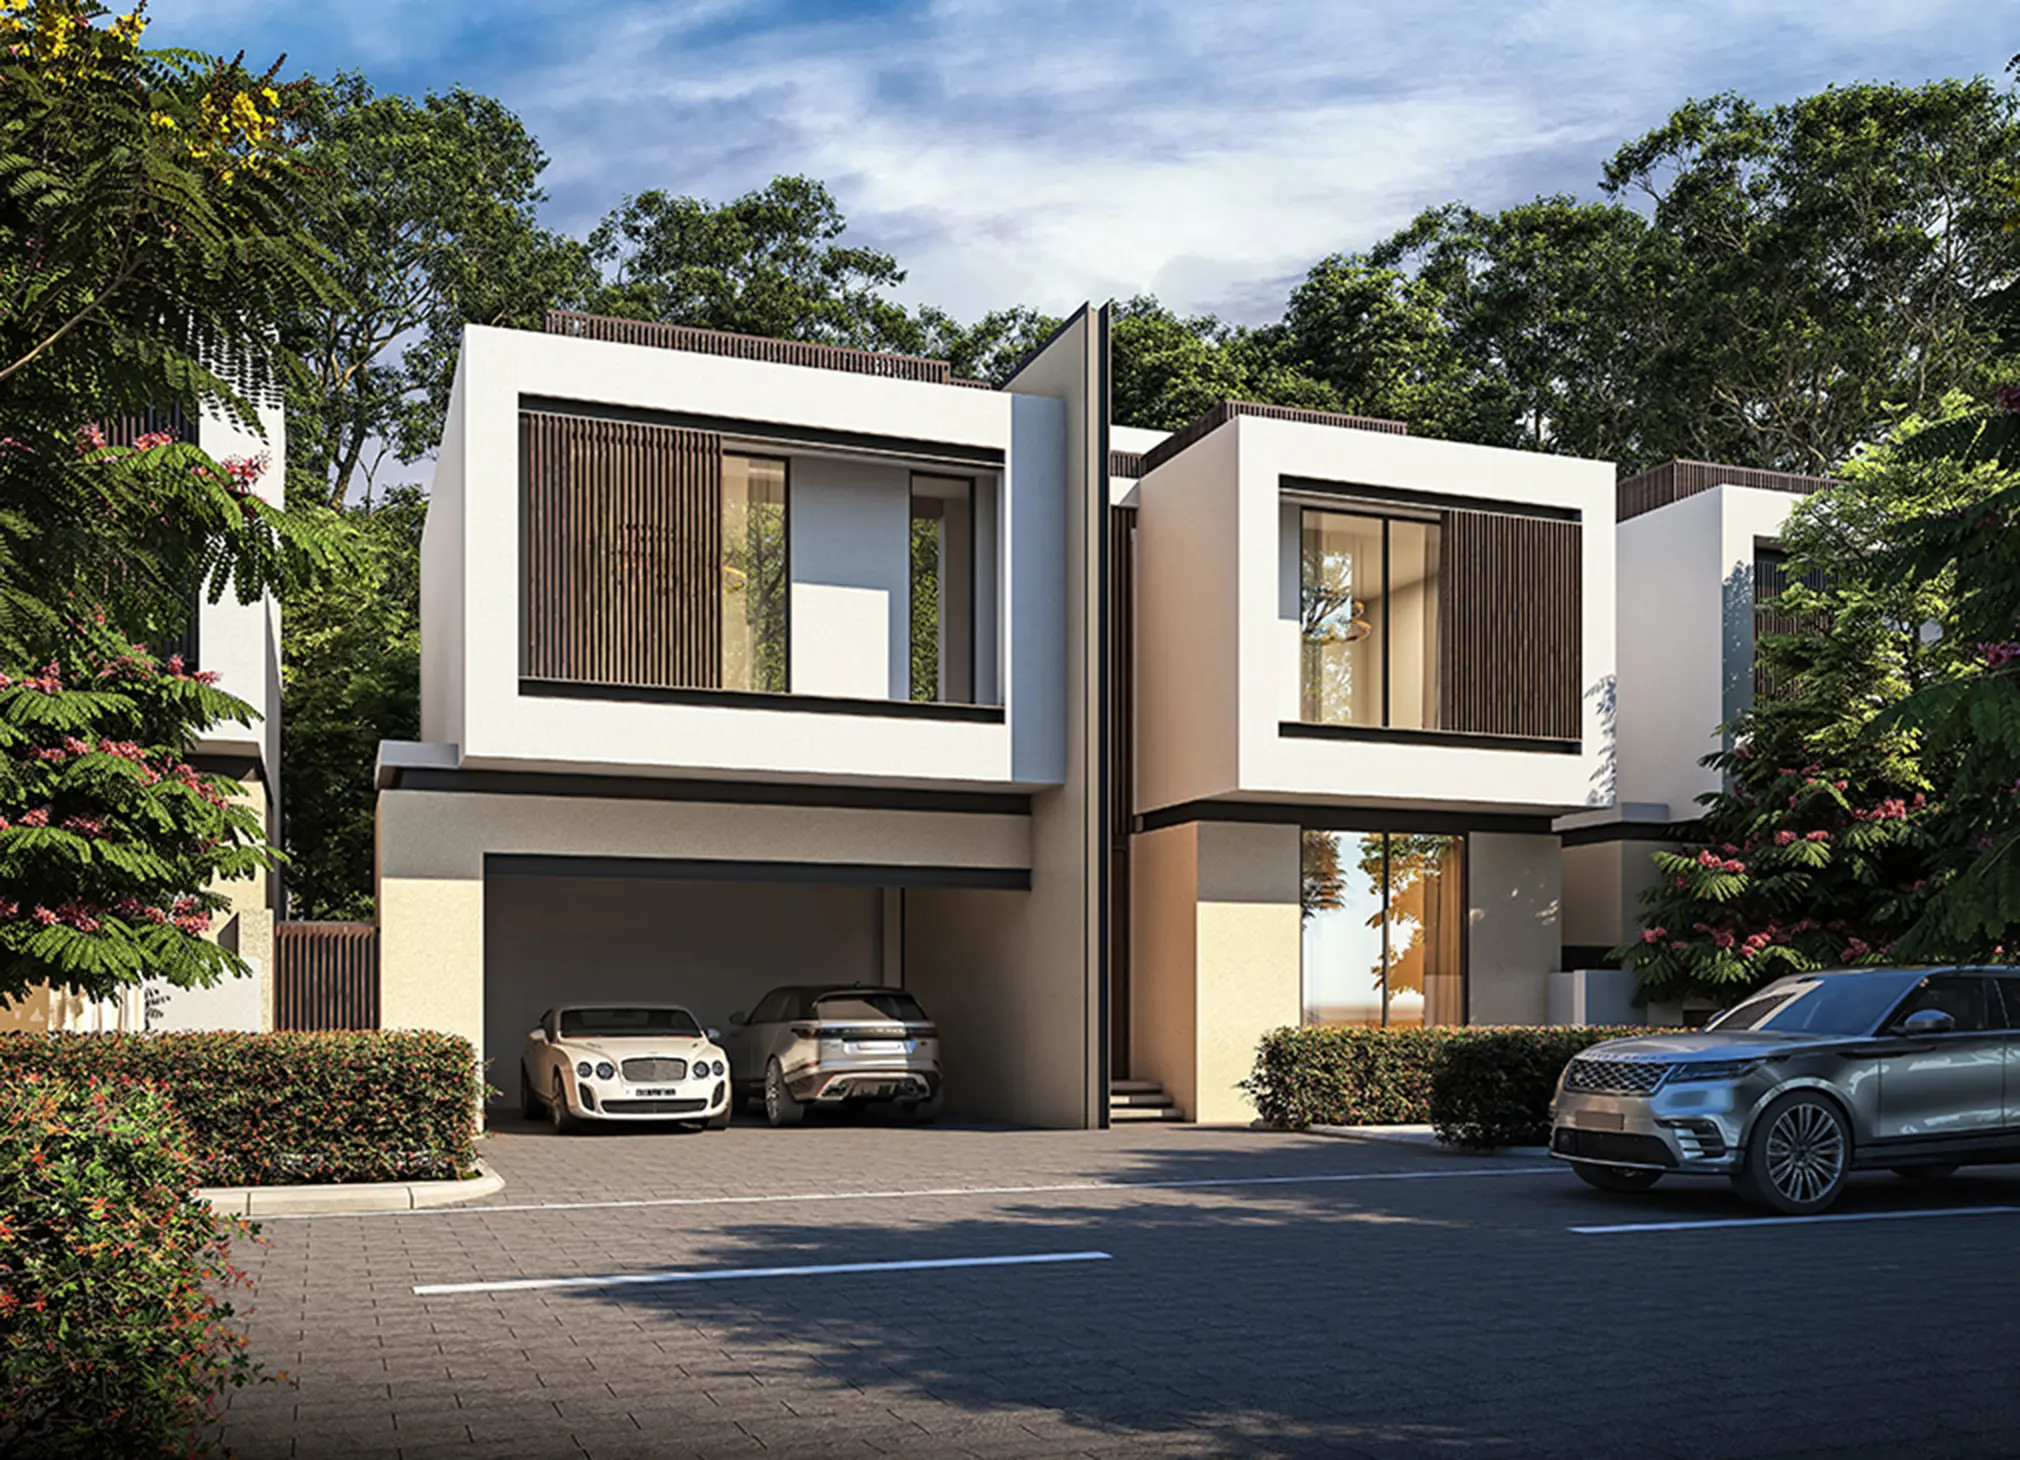 SOBHA RESERVE Villas at Wadi Al Safa, Dubailand - Smart Zones® Luxury Properties